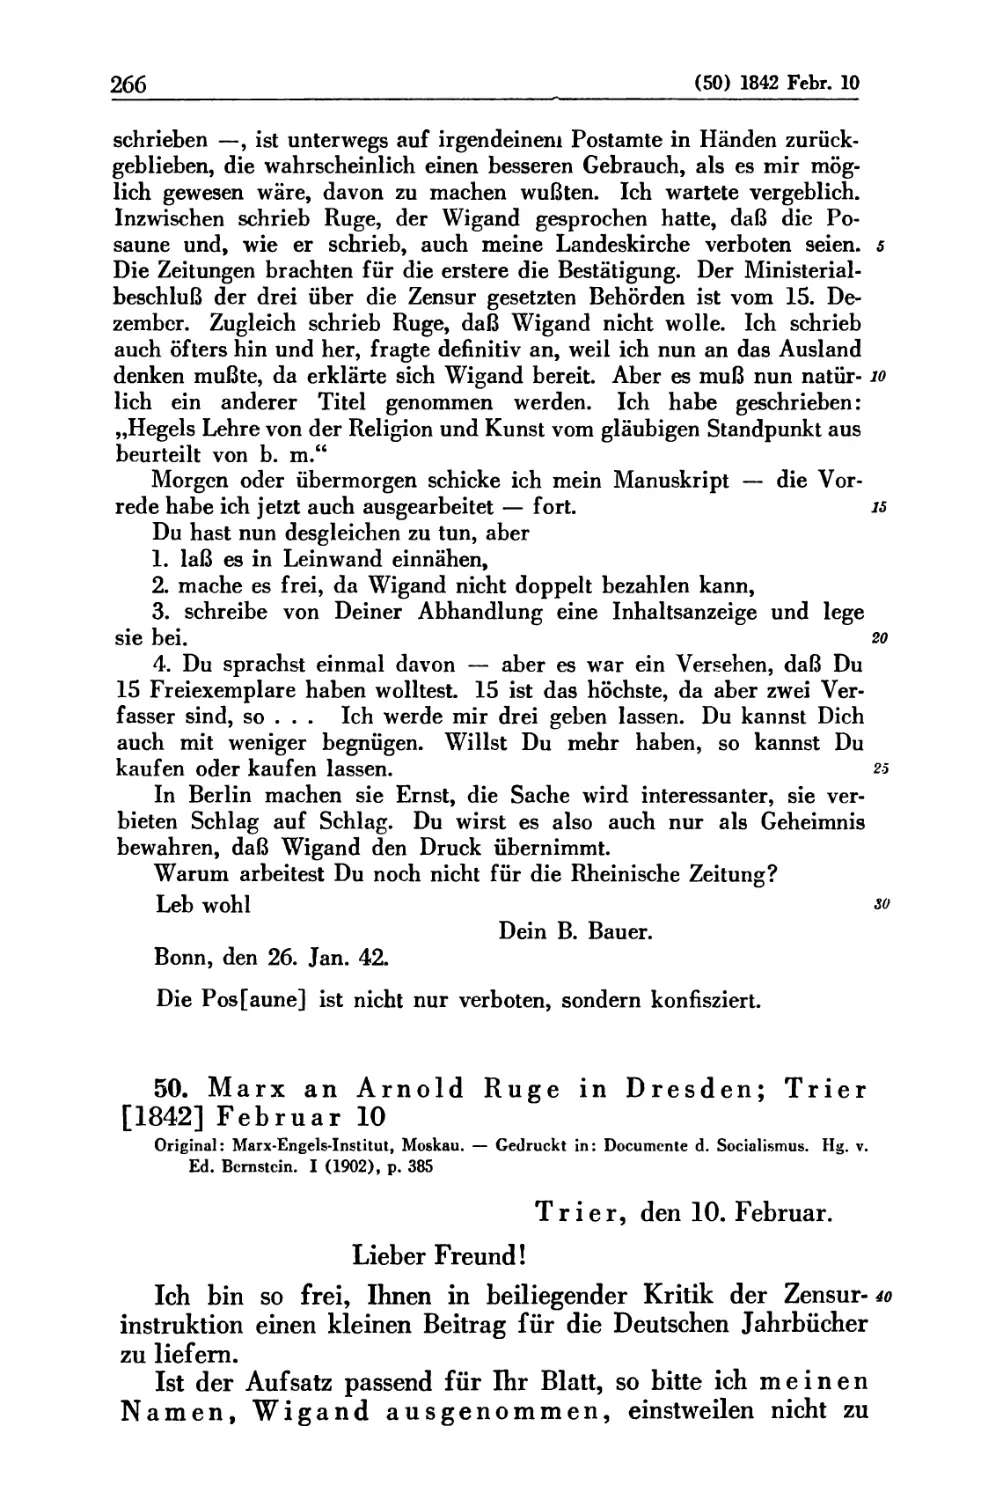 50. Marx an Arnold Ruge in Dresden; Trier [1842] Februar 10